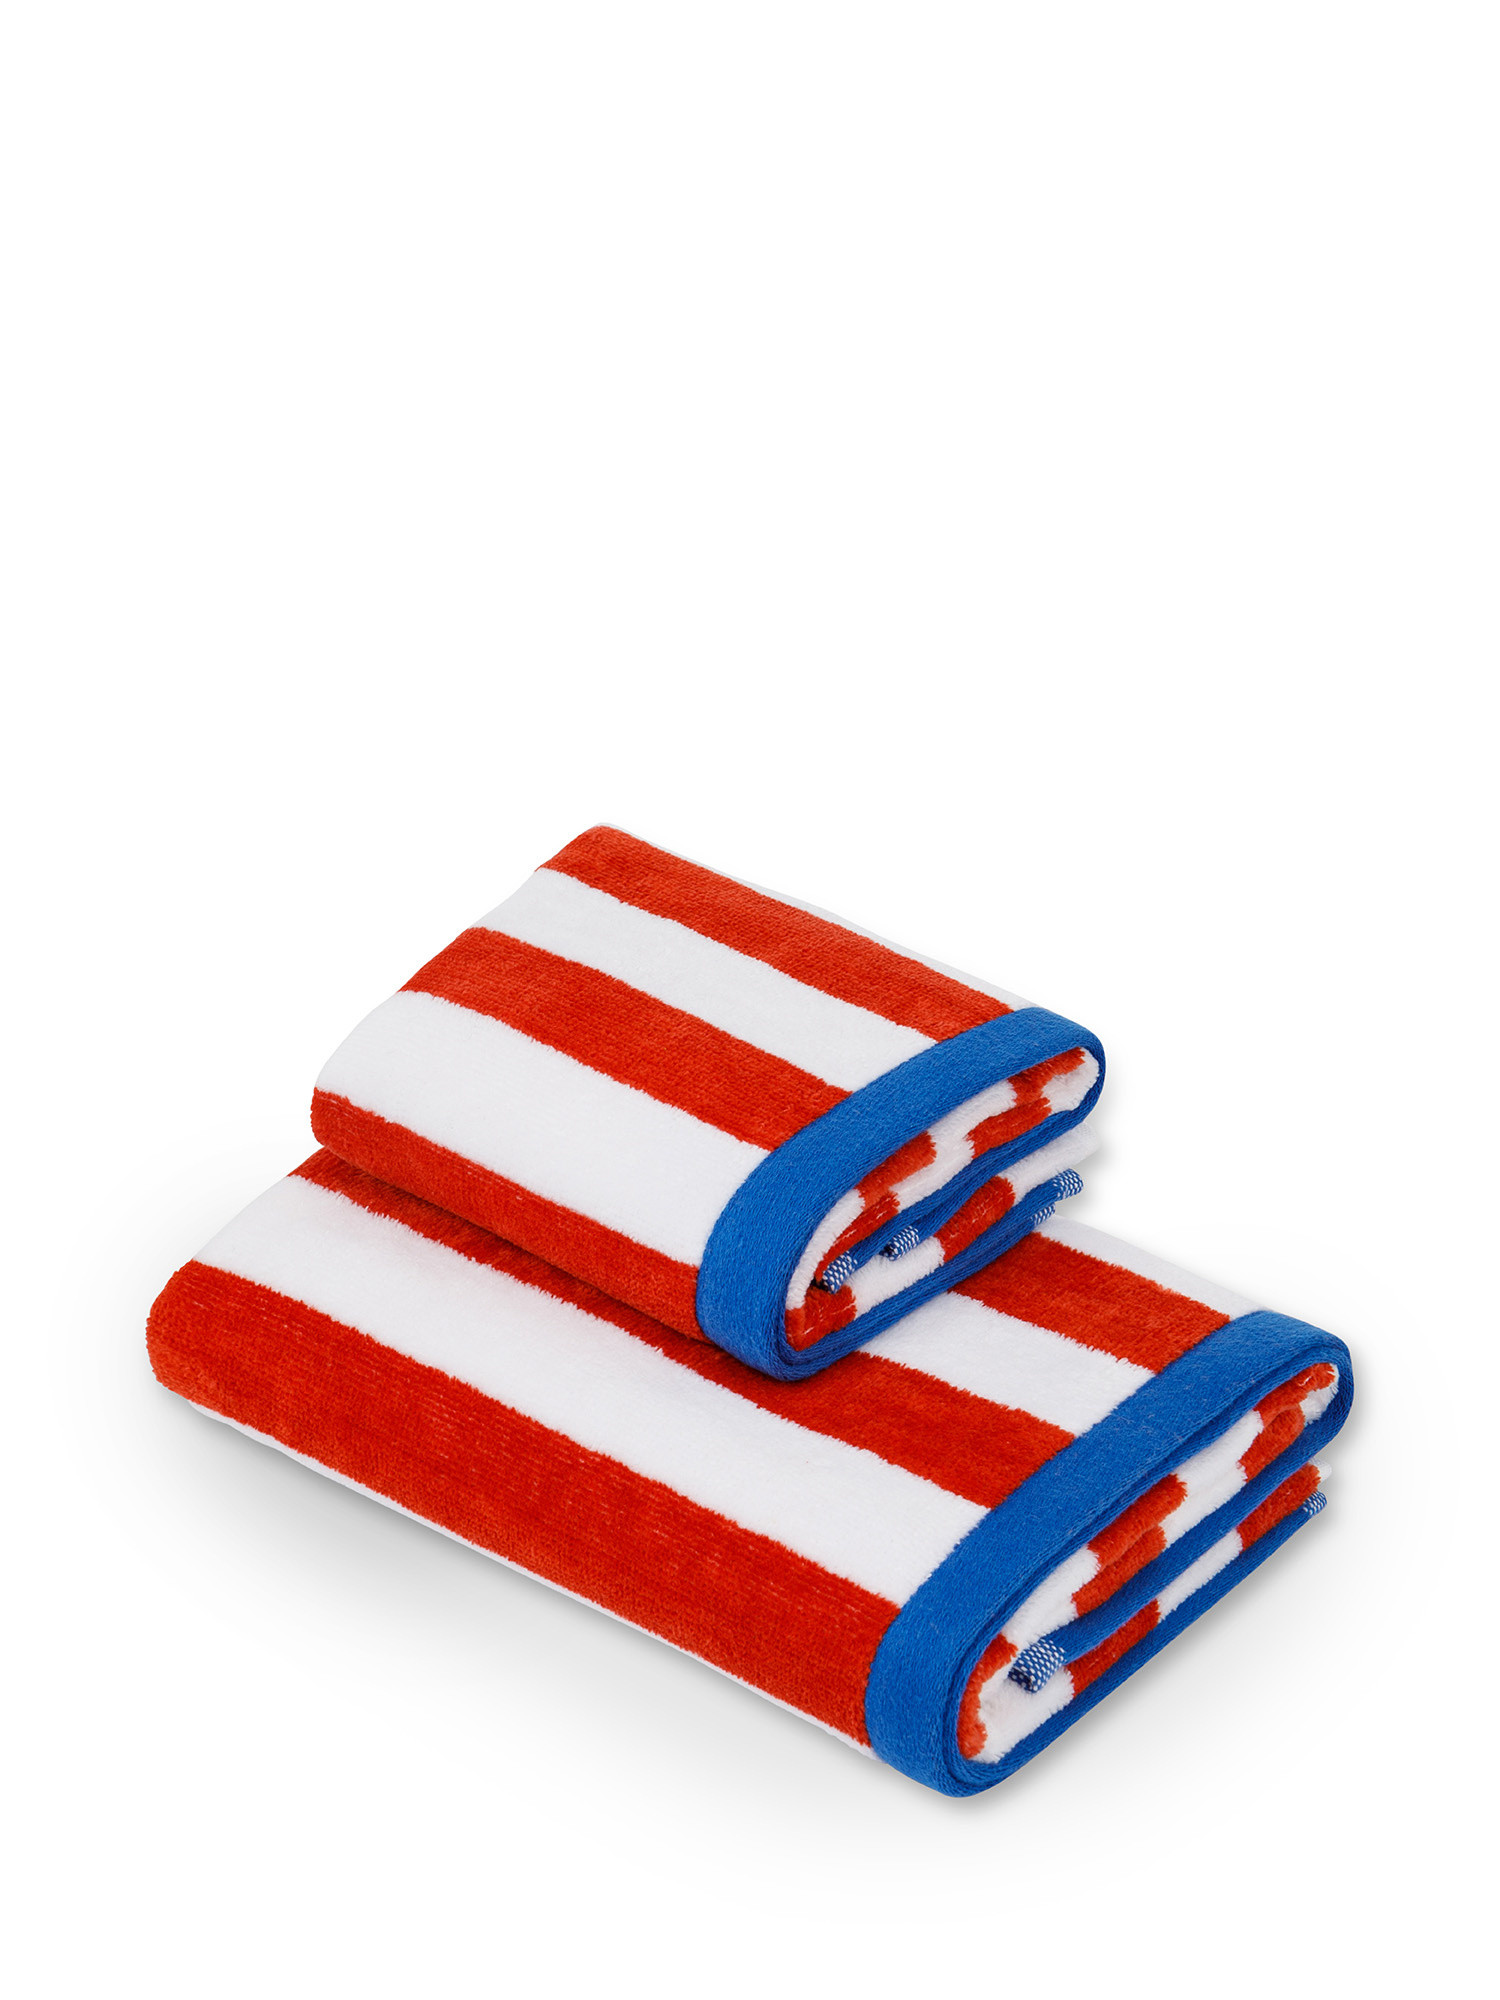 Velor cotton towel with sailor stripes motif, Red, large image number 0